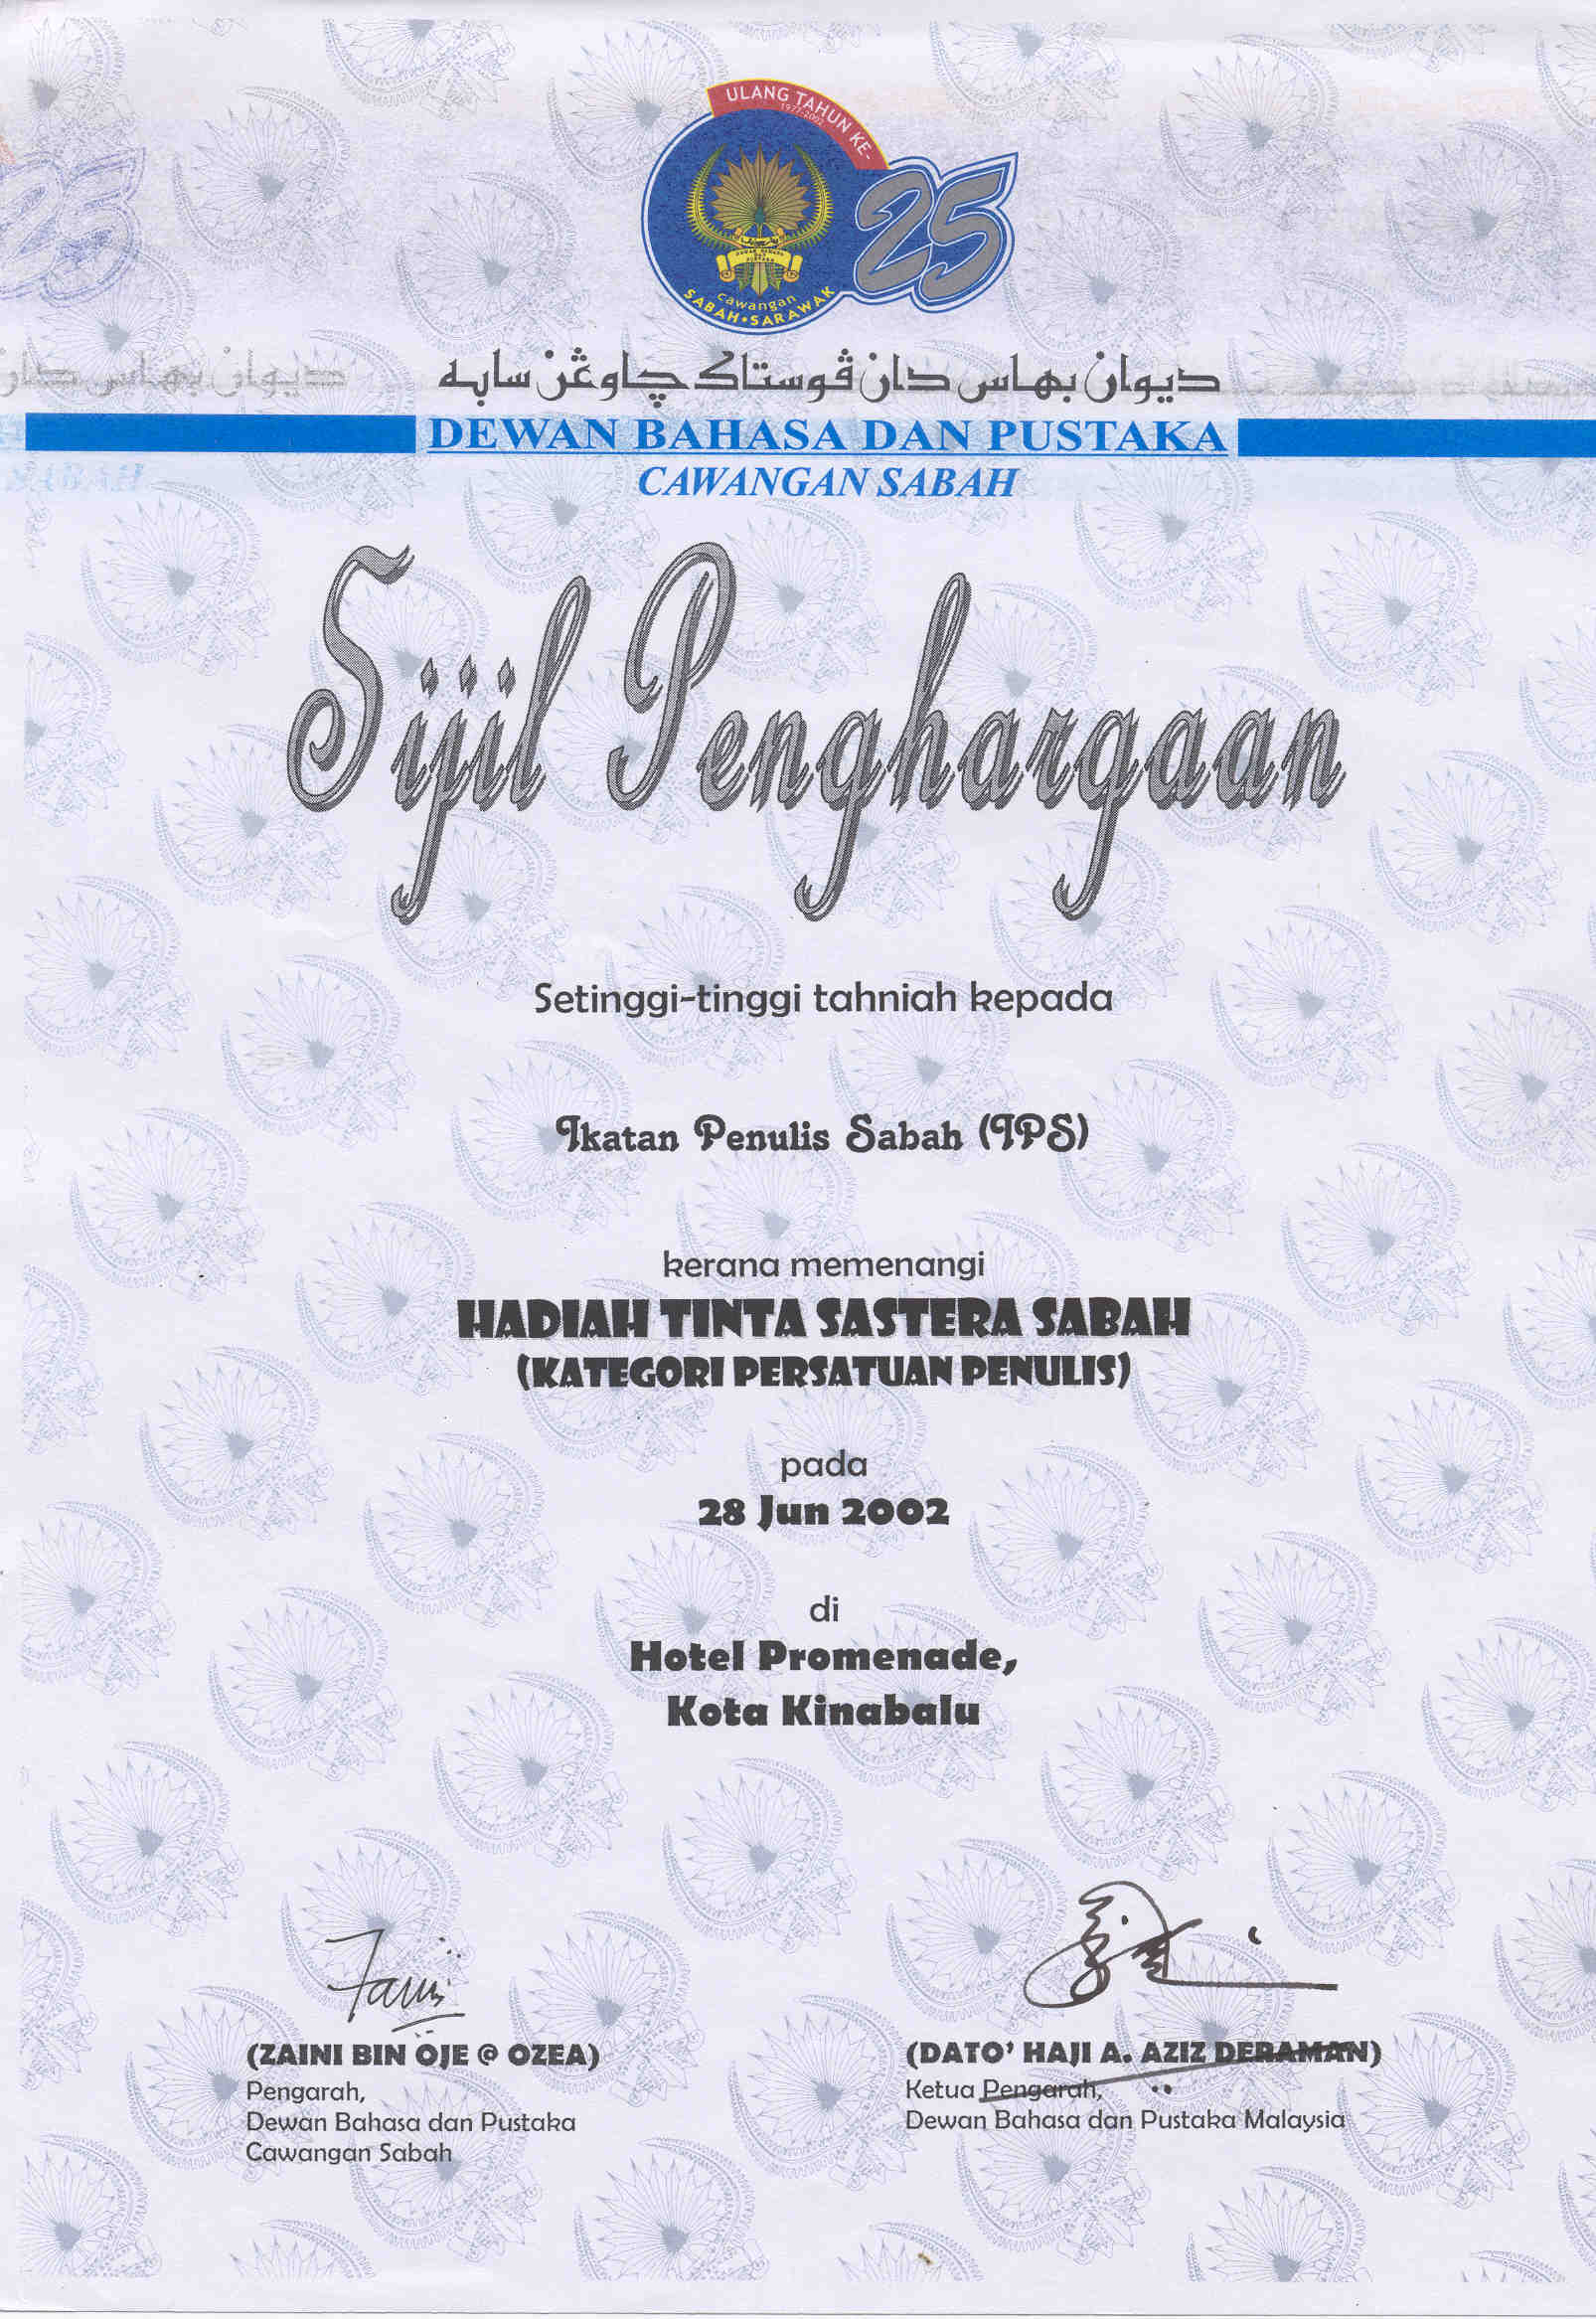 IPS menerima Hadiah Tinta Sastera buat kali ketiga pada tahun 2004. Hadiah ini merupakan penghargaan kepada persatuan penulis yang aktif di Sabah setiap dua tahun. Kali pertama IPS menerima hadiah yang sama pada tahun 1999 dan kali yang kedua pada tahun 2001.